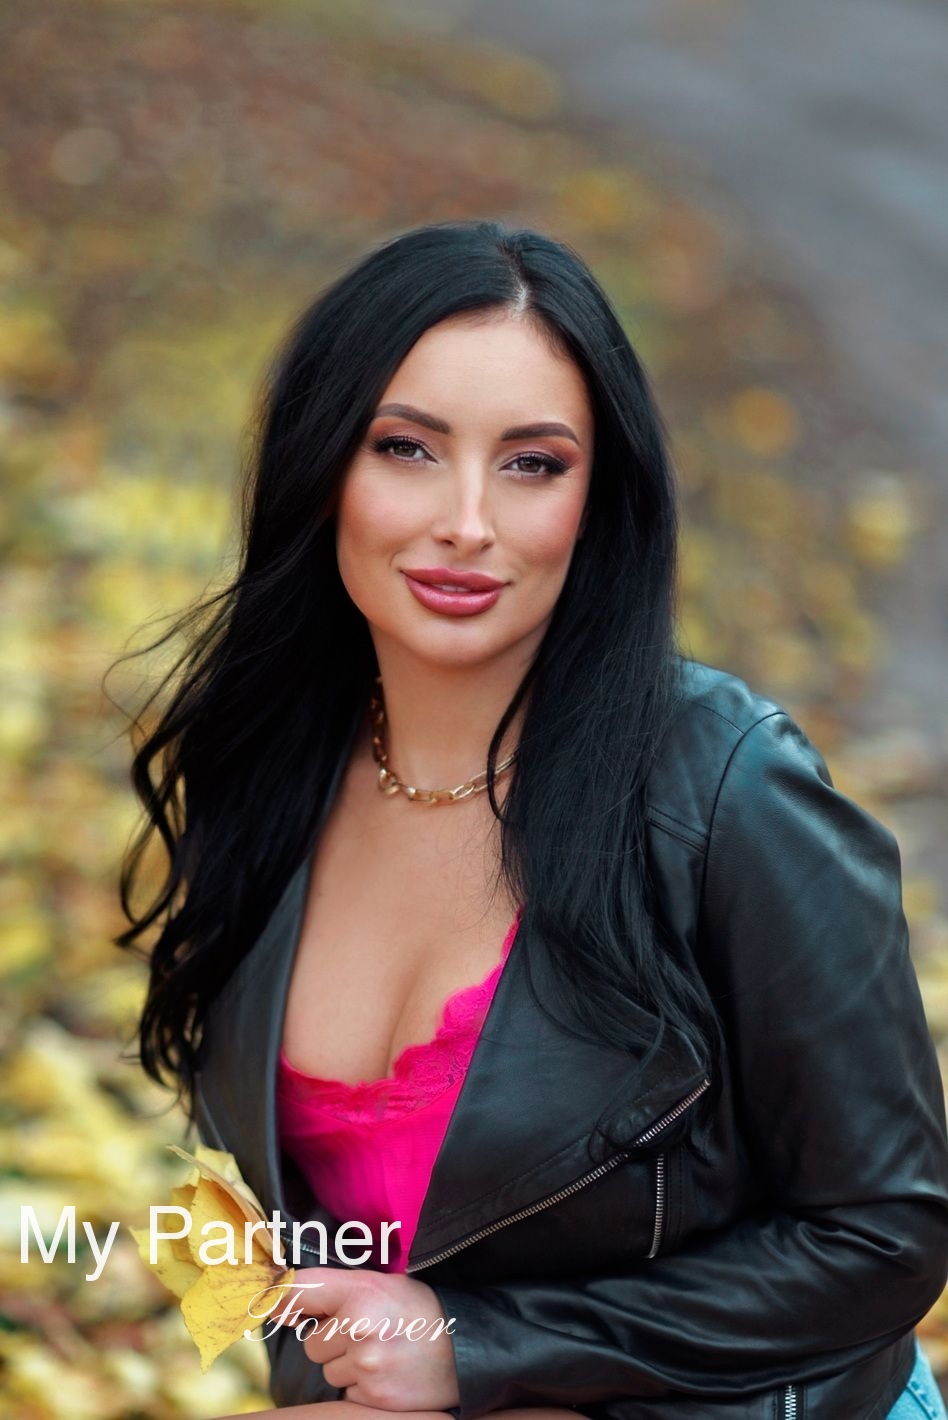 Dating Service to Meet Stunning Ukrainian Lady Olga from Kharkov, Ukraine